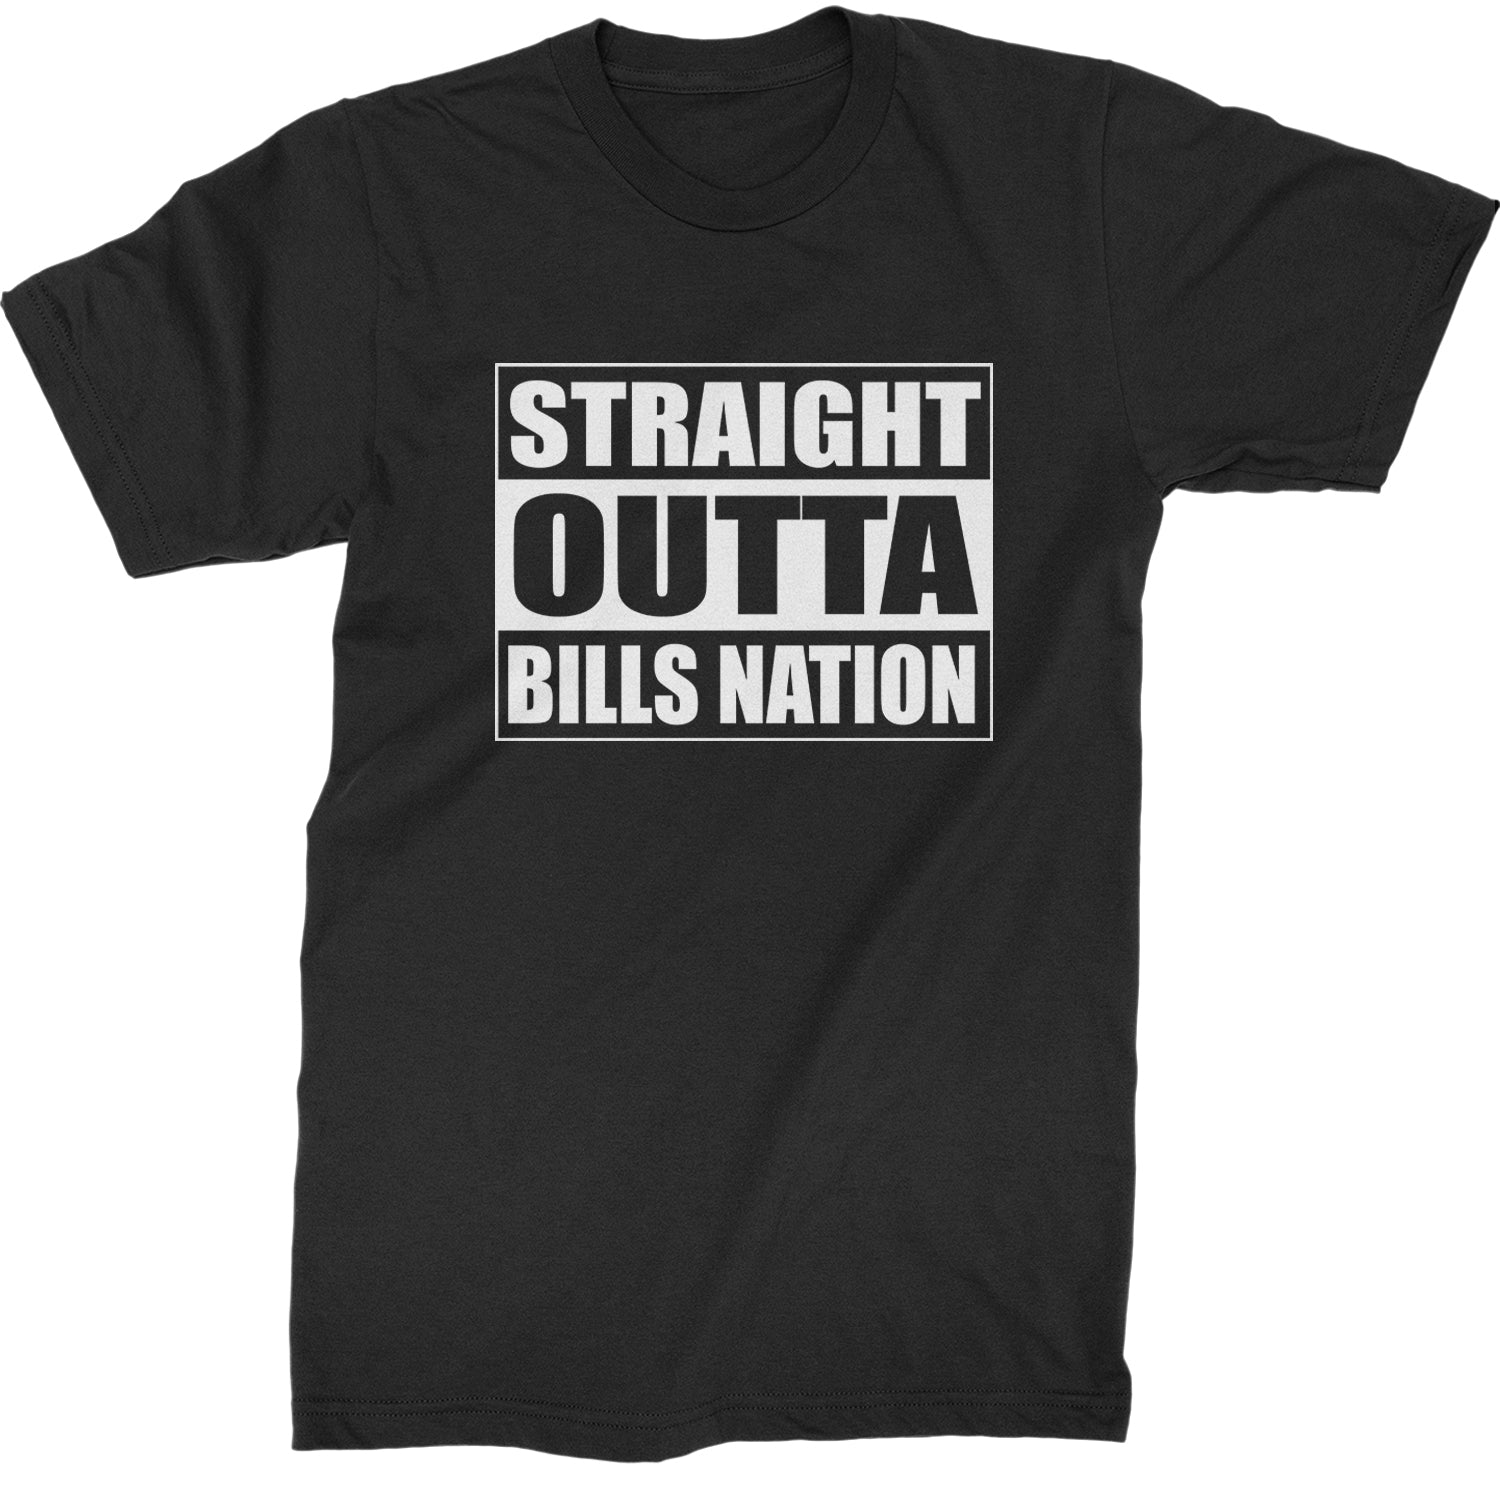 Straight Outta Bills Nation  Mens T-shirt Black